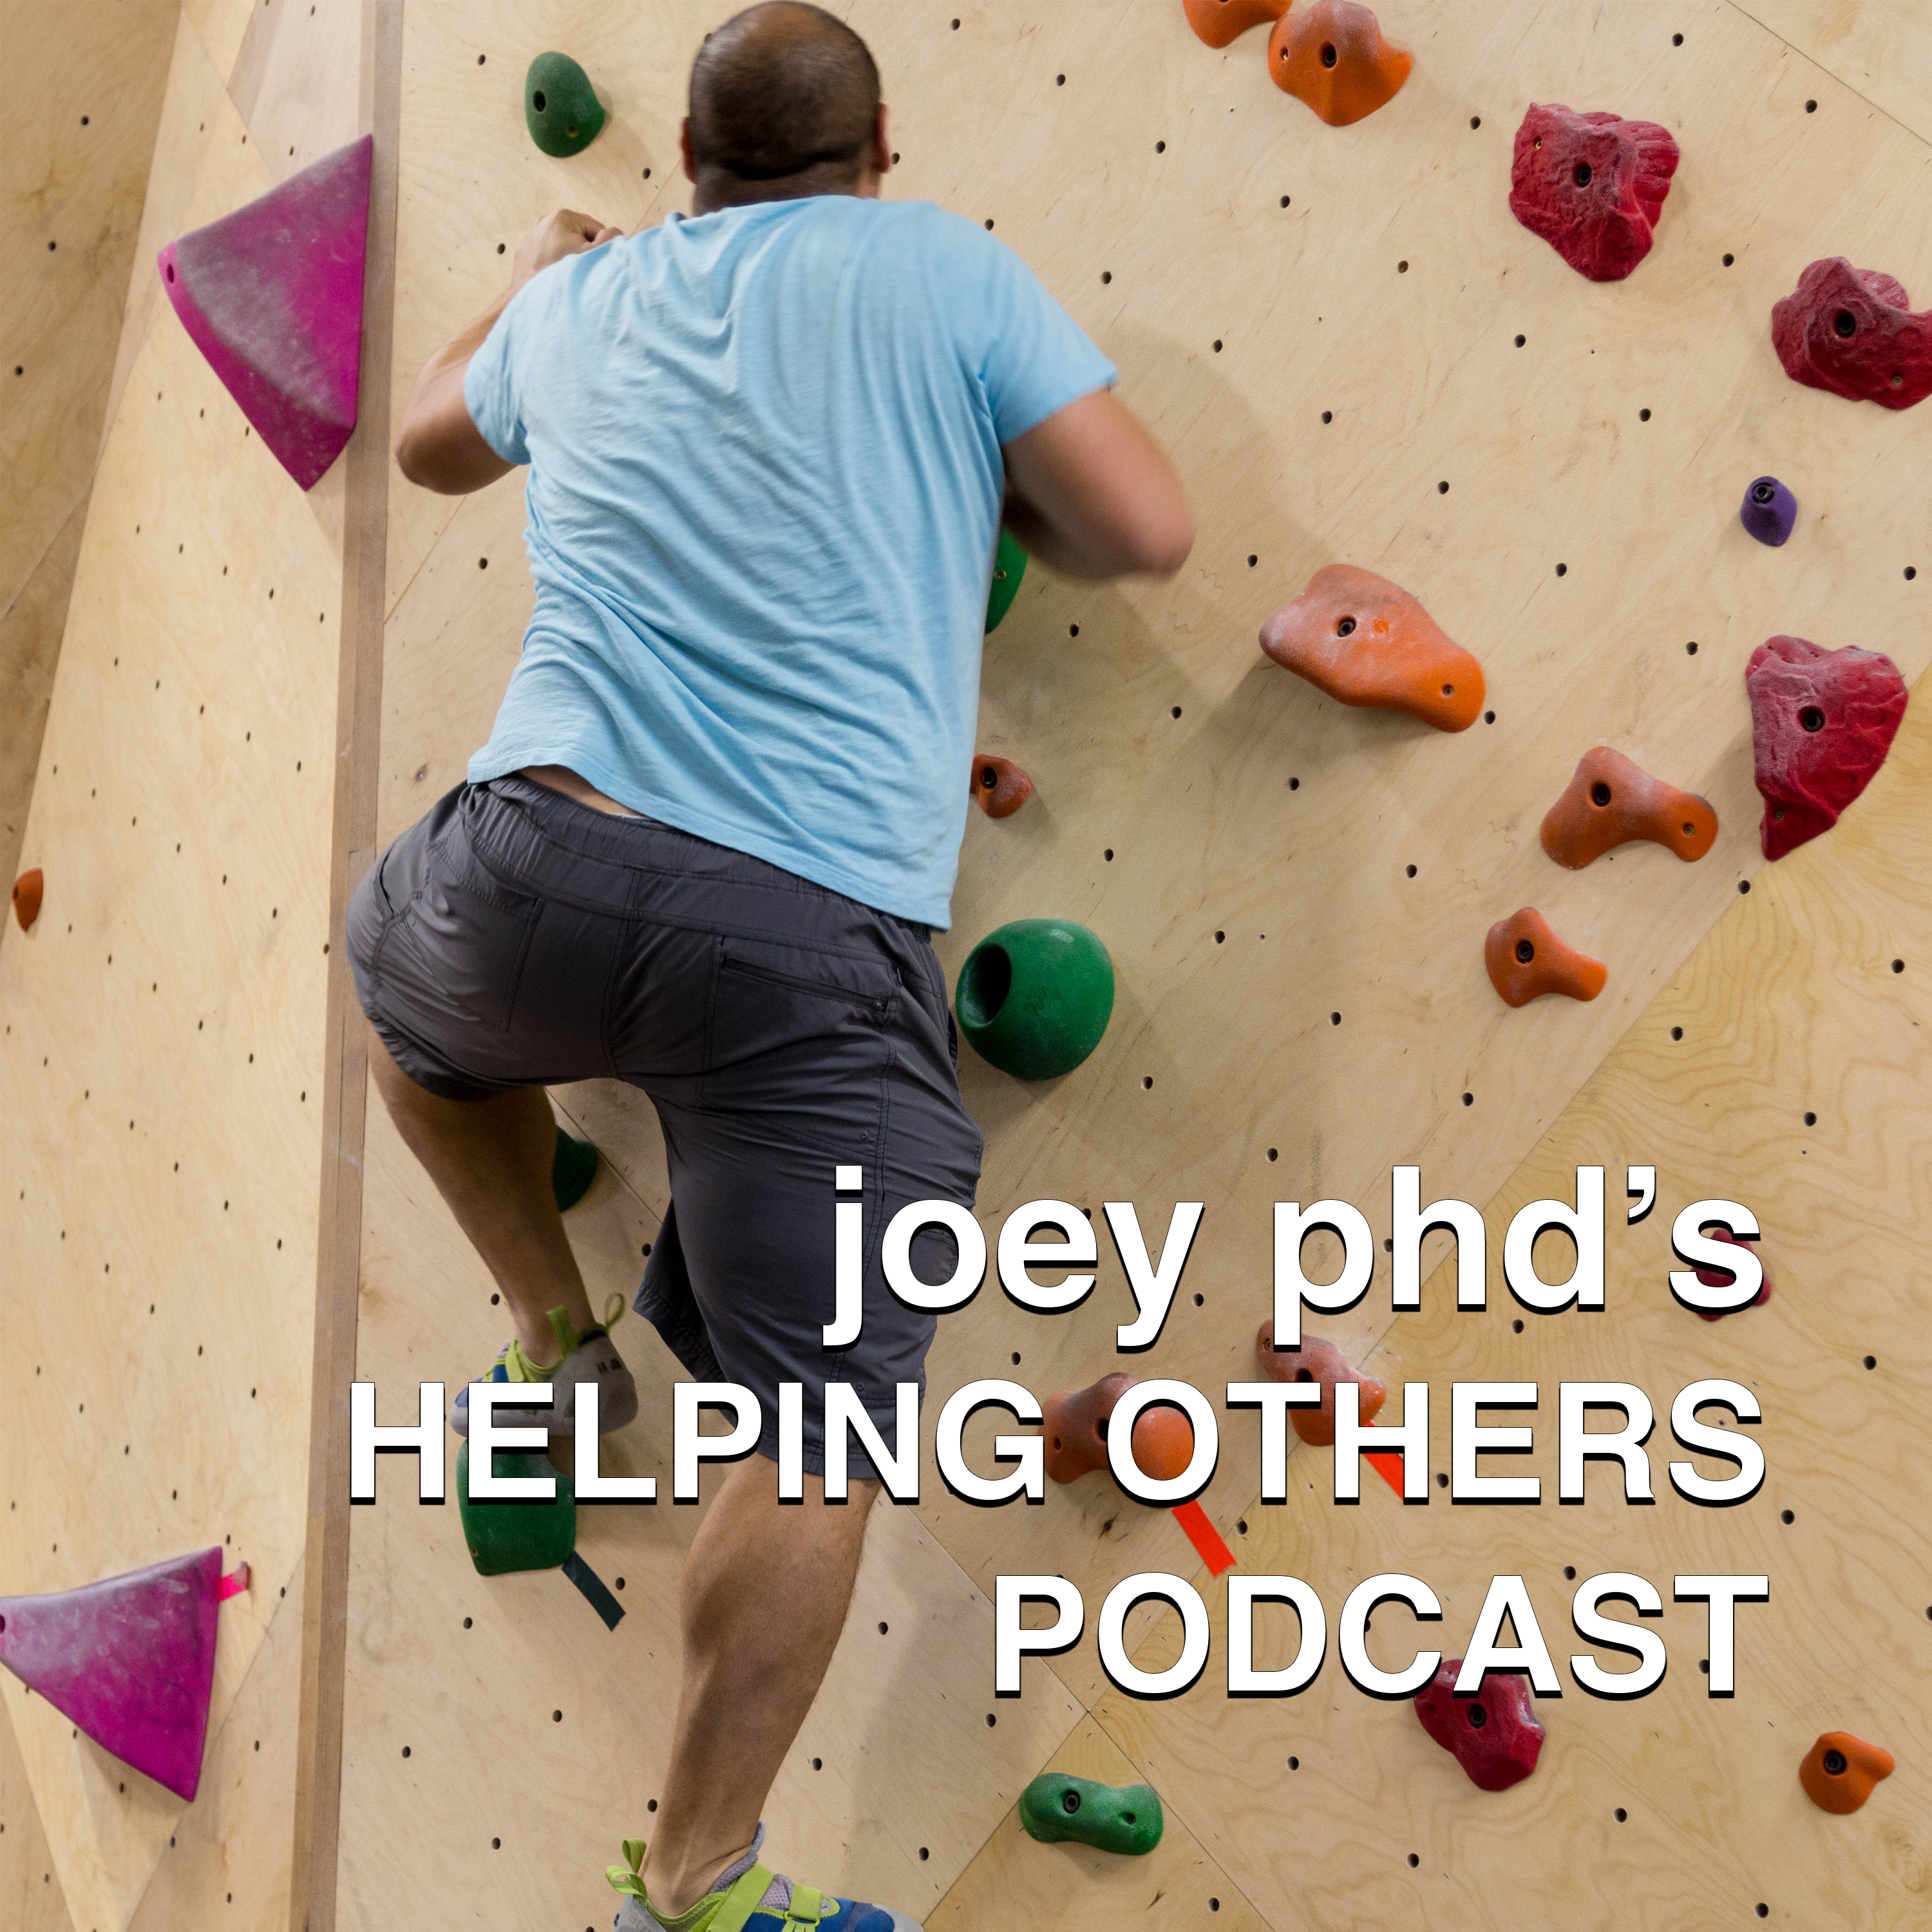 joey phd's podcast